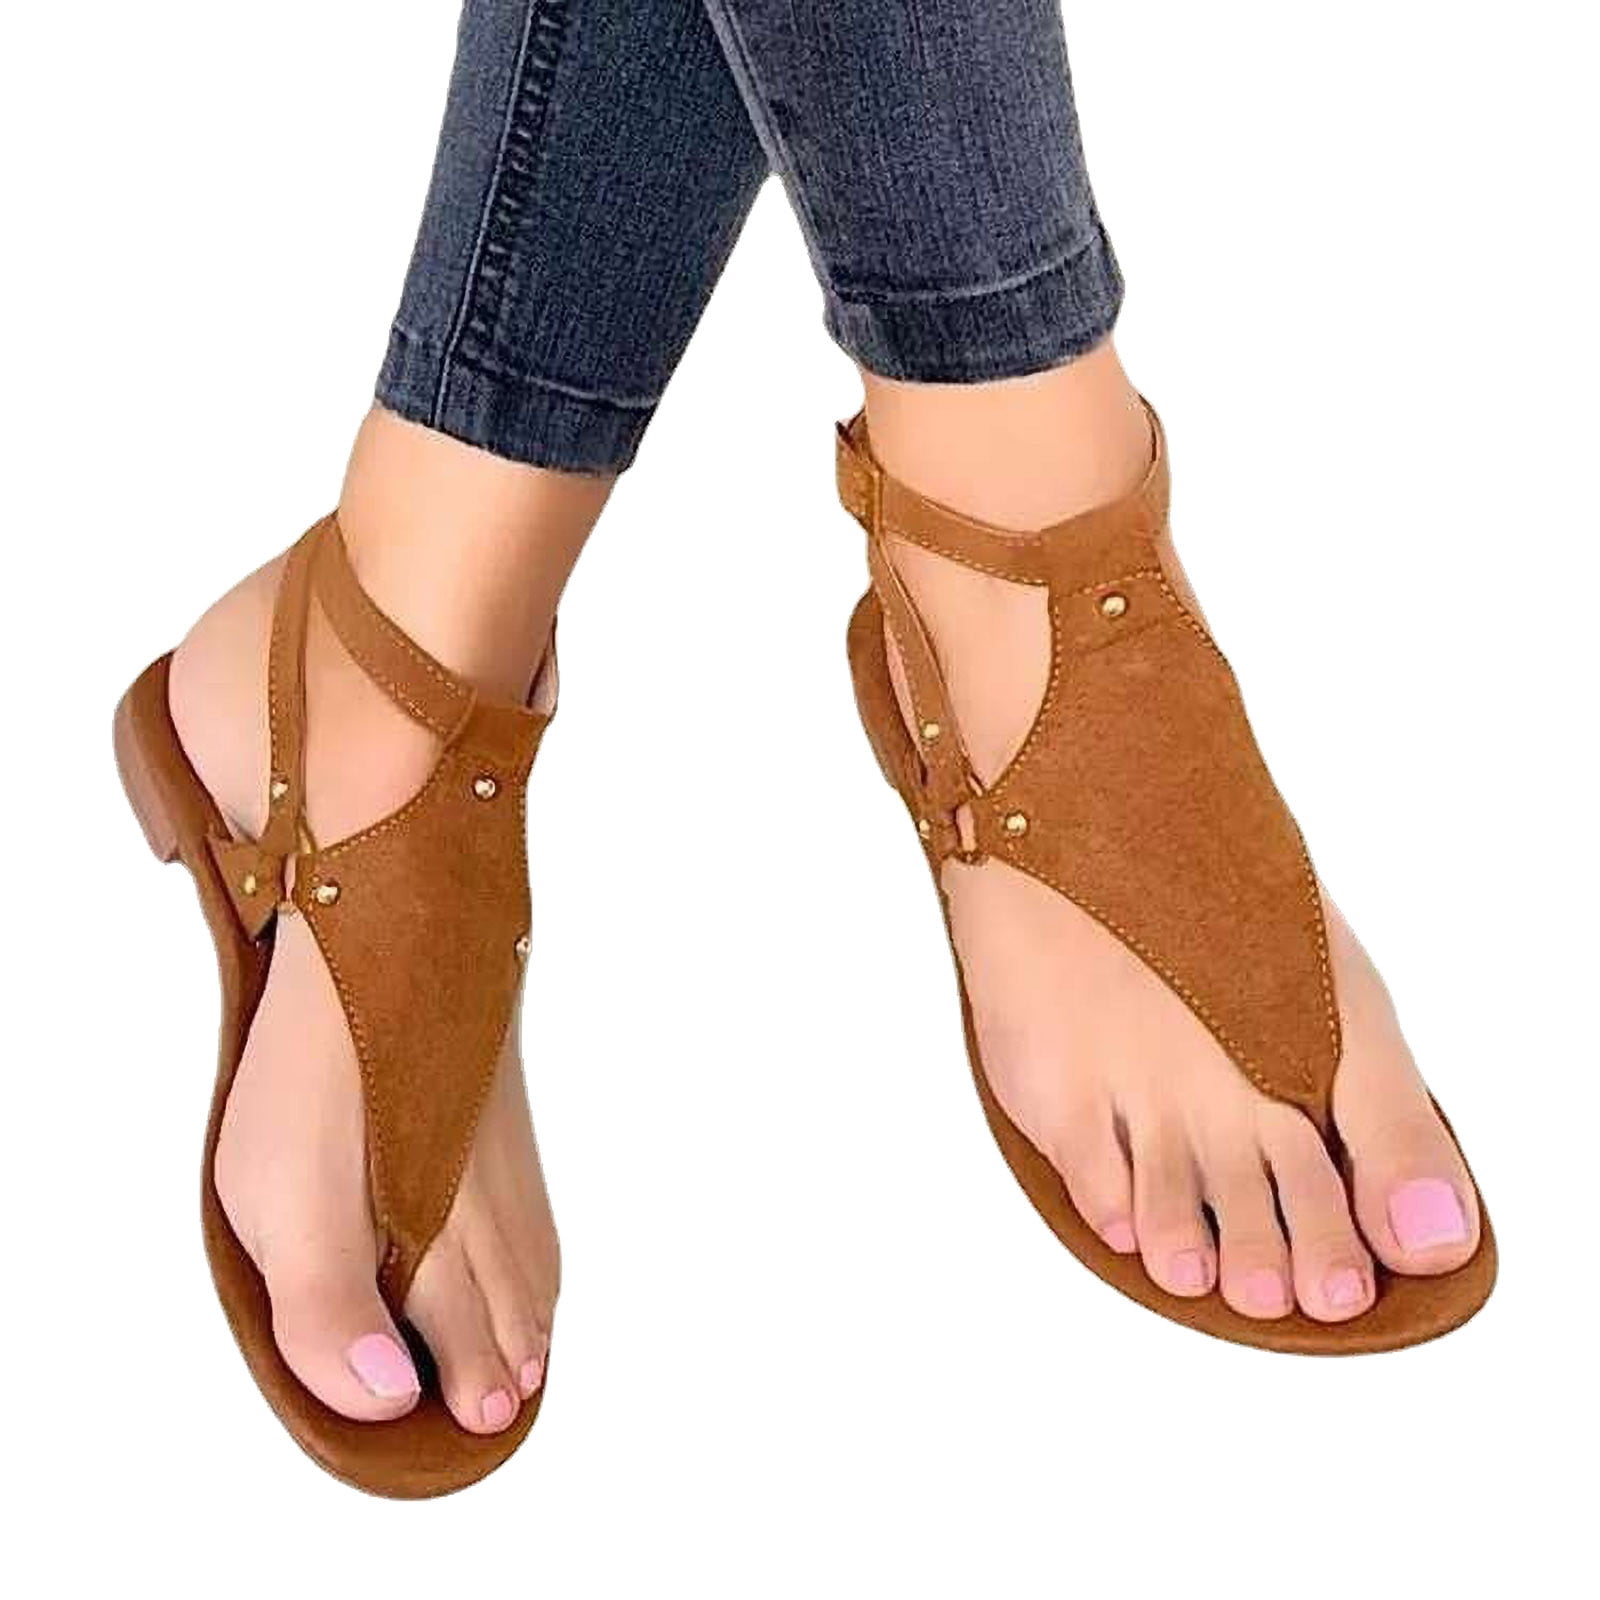 bueqcy Sandals for Women Summer Bohemian Beach Sandals Gem Strap Open Toe Casual Comfy Gladiator Sandals Back Elastic Band Flat Heel Clip-Toe Shoes Flip-Flops 